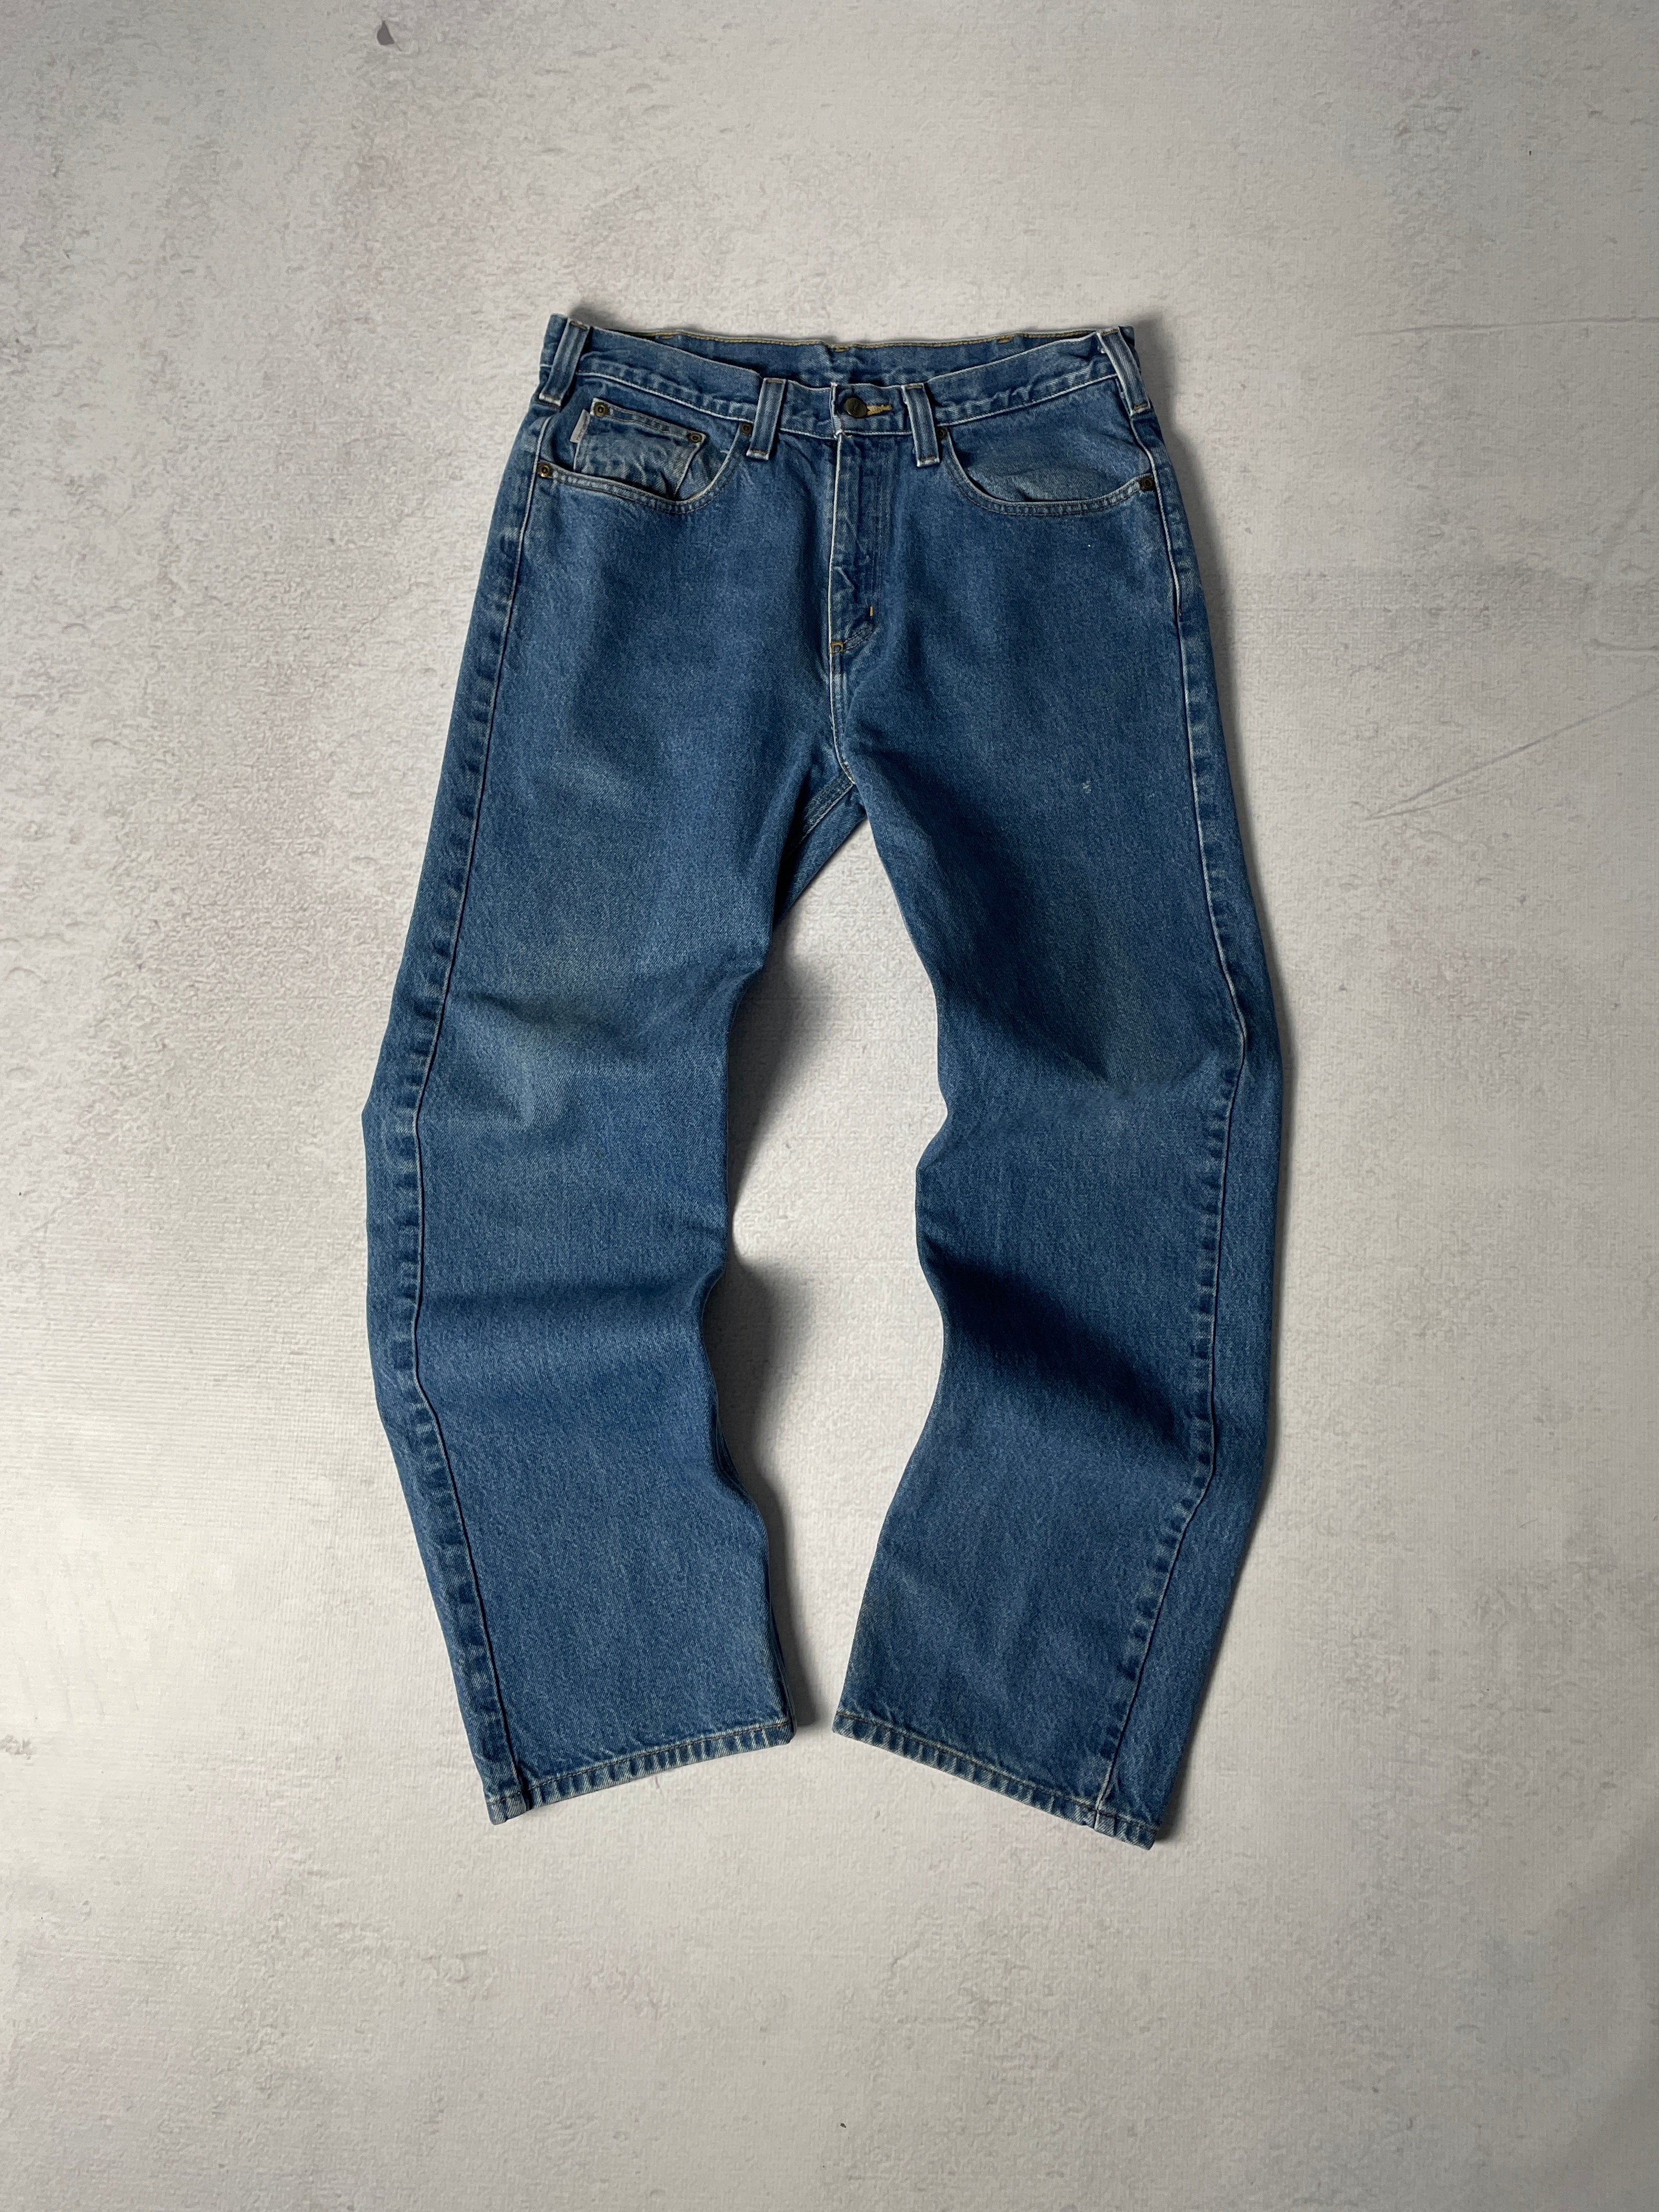 Vintage Carhartt Jeans - Men's 34 x 32